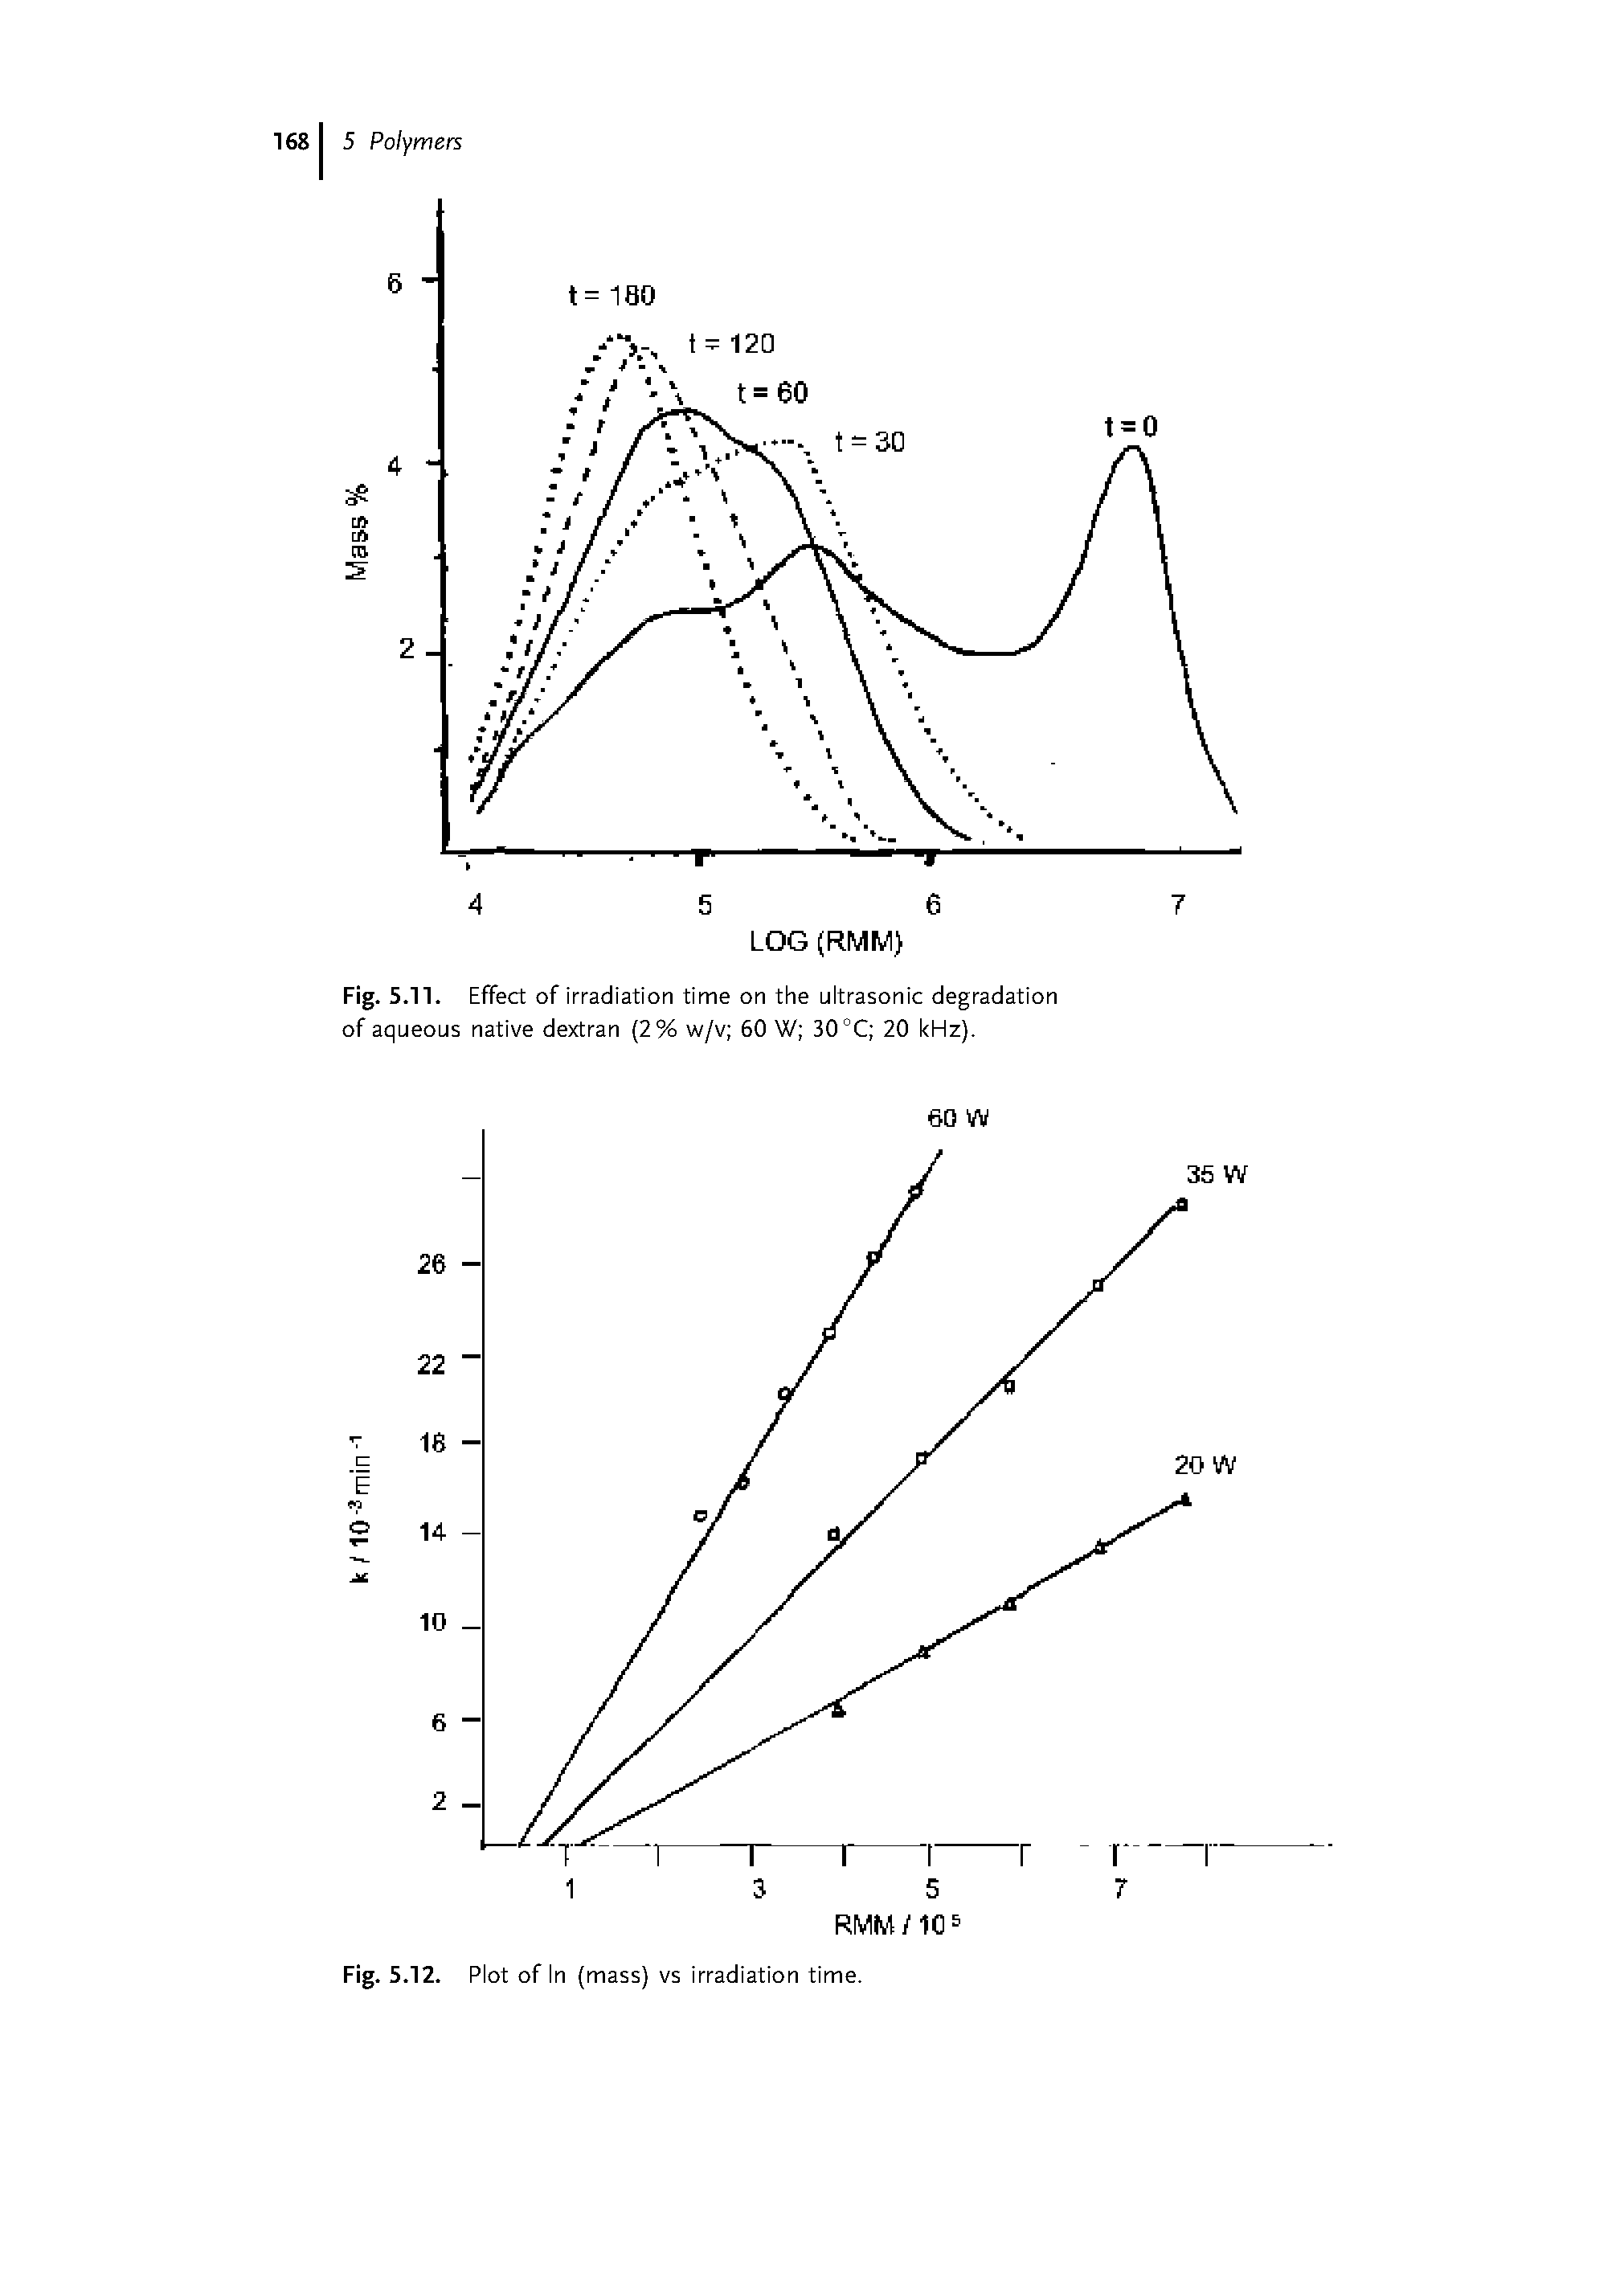 Fig. 5.11. Effect of irradiation time on the ultrasonic degradation of aqueous native dextran [2% w/v 60 W 30°C 20 kHz).